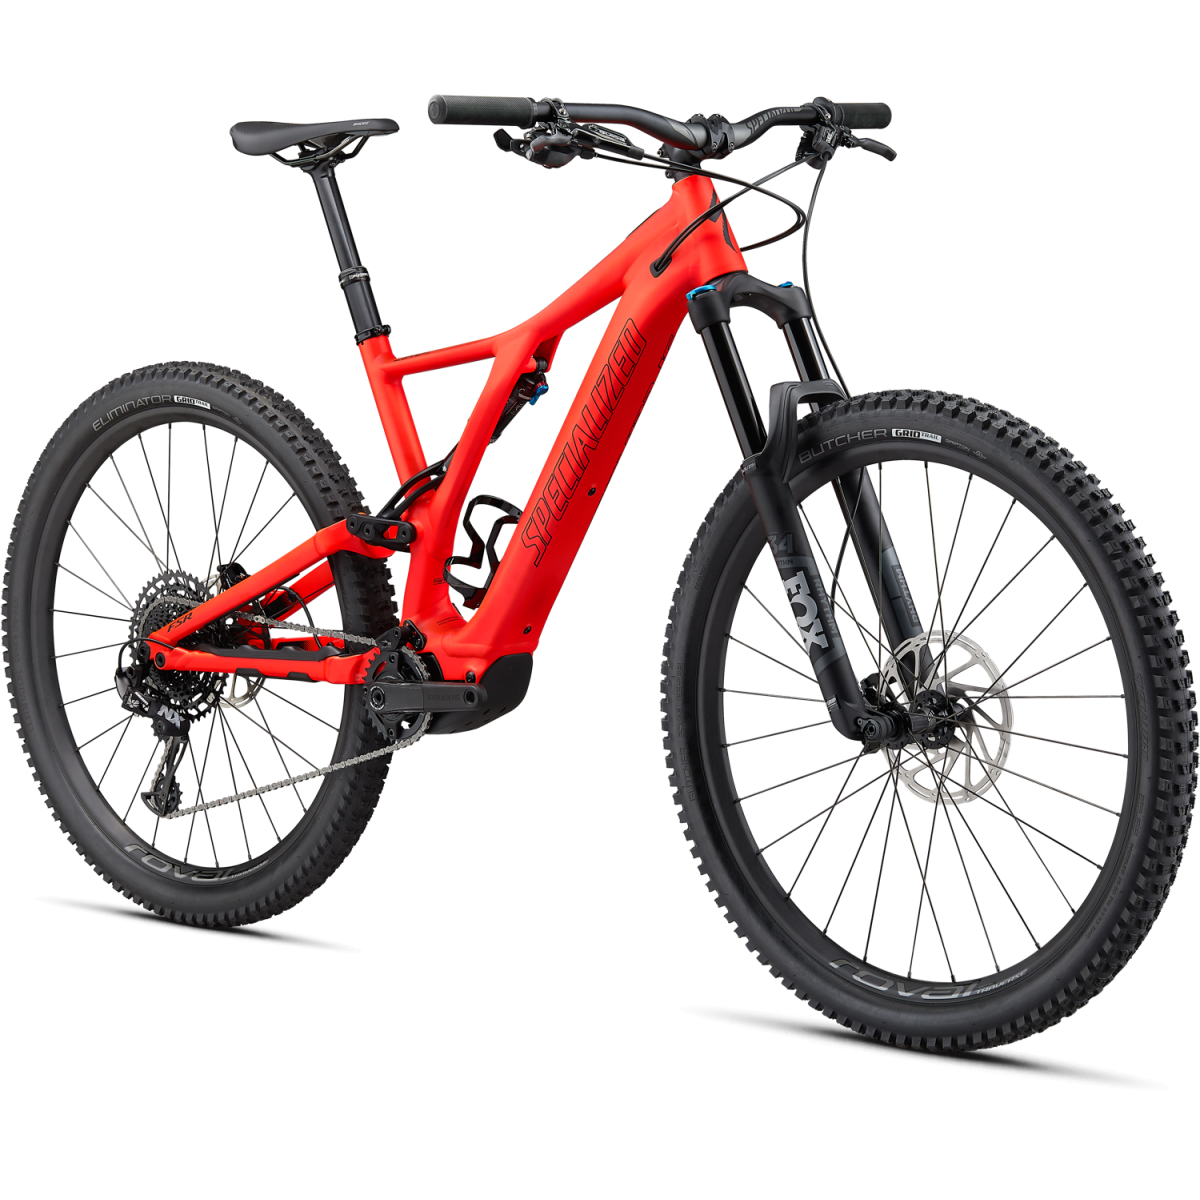 Specialized Turbo Levo SL Comp elektrinis dviratis / Red